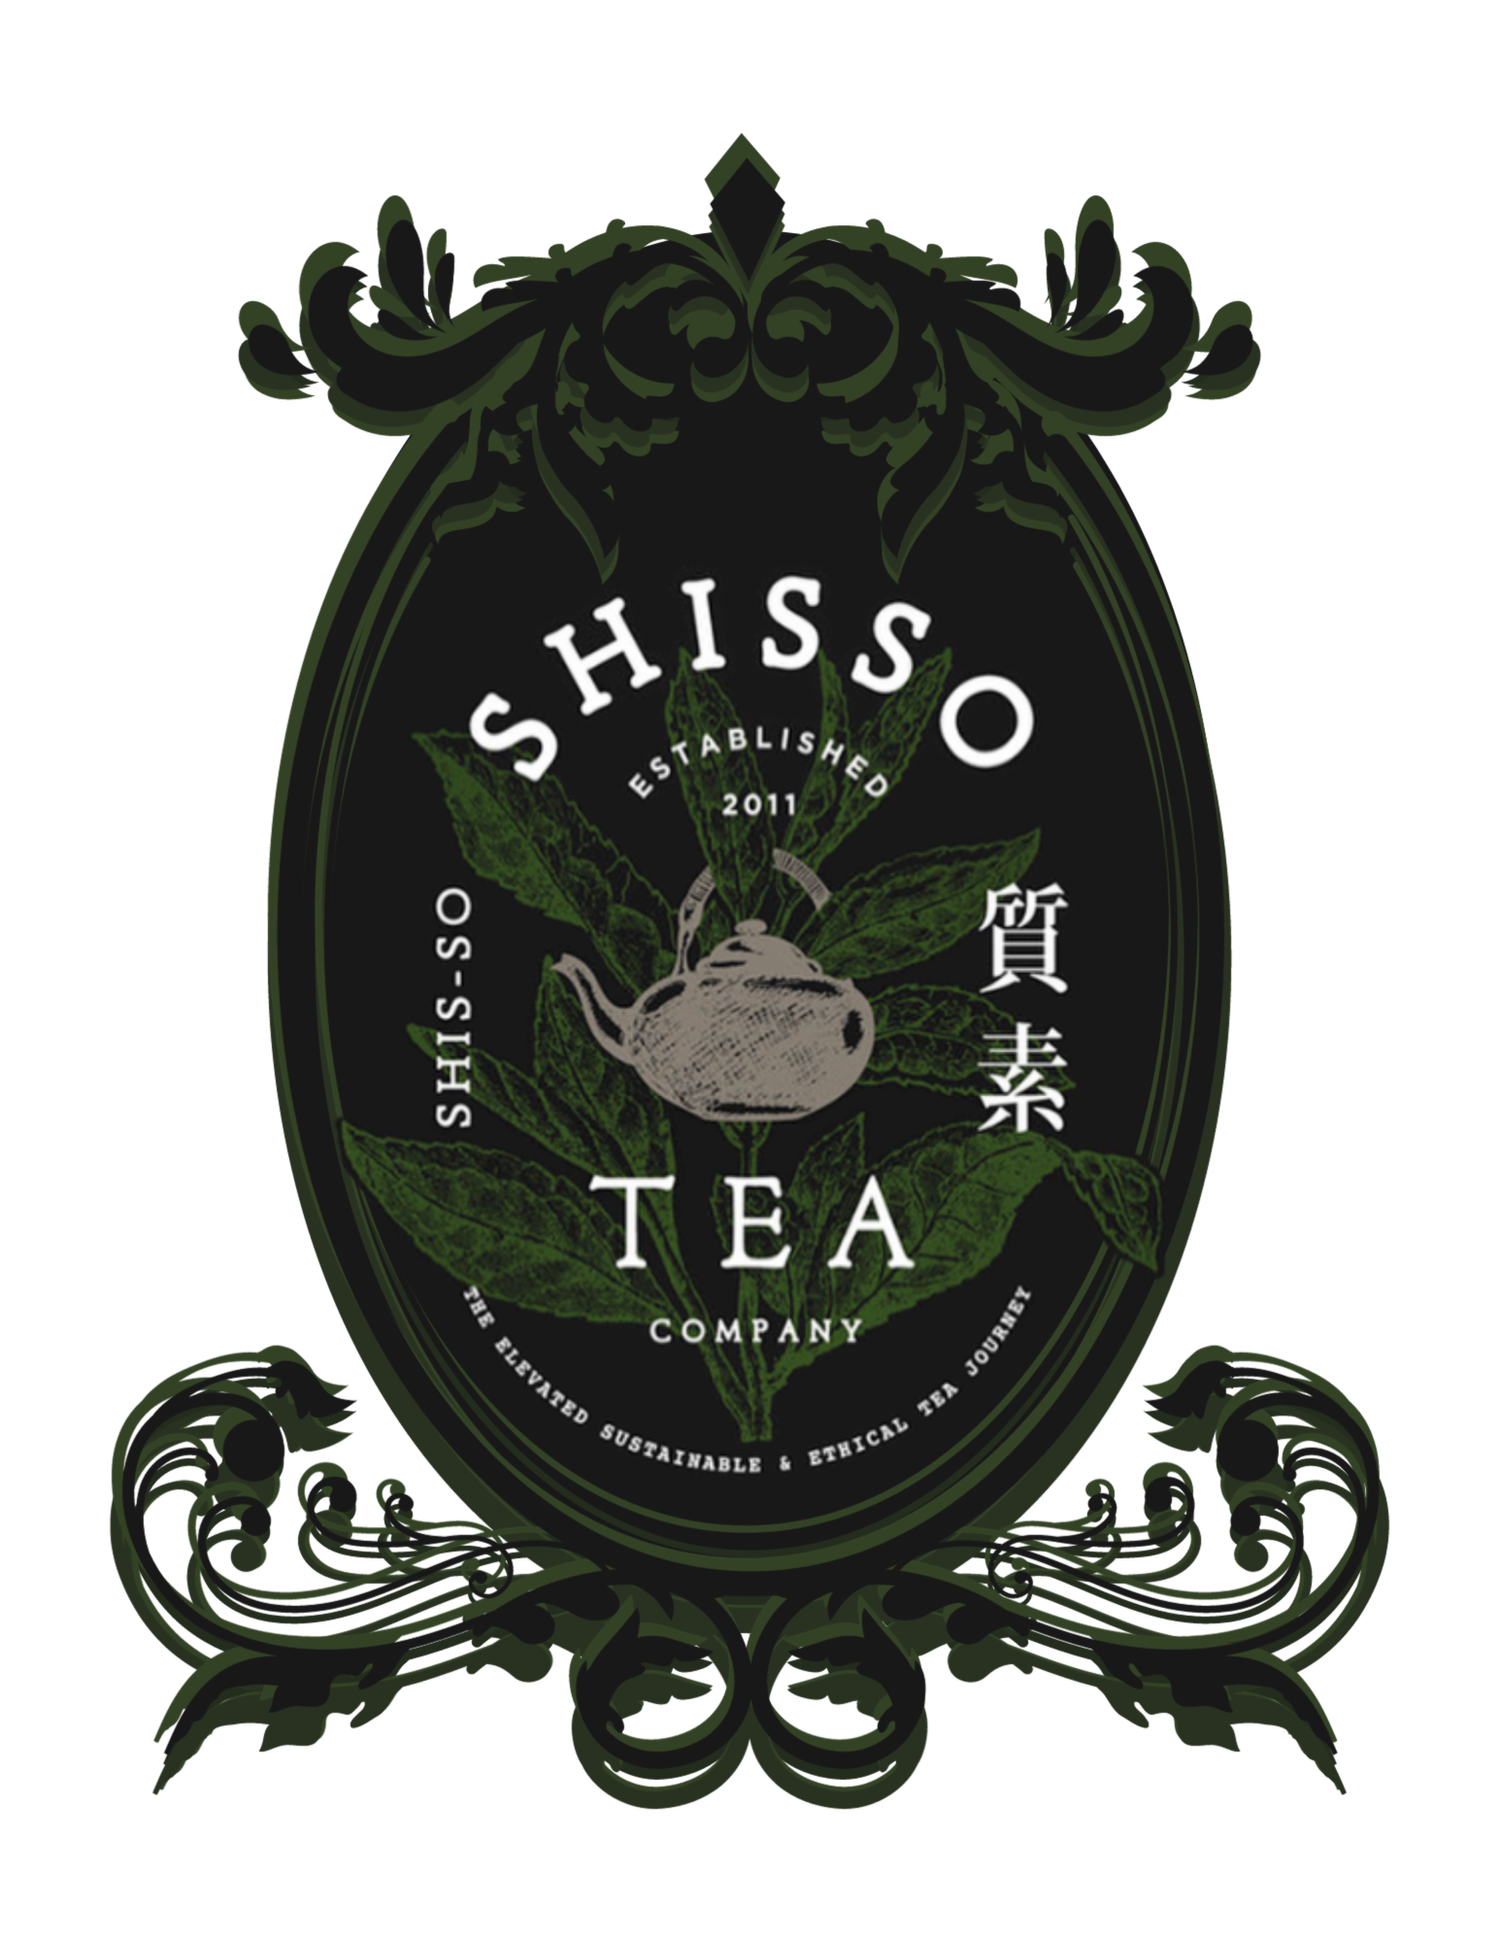 Shisso Tea Company Inc.